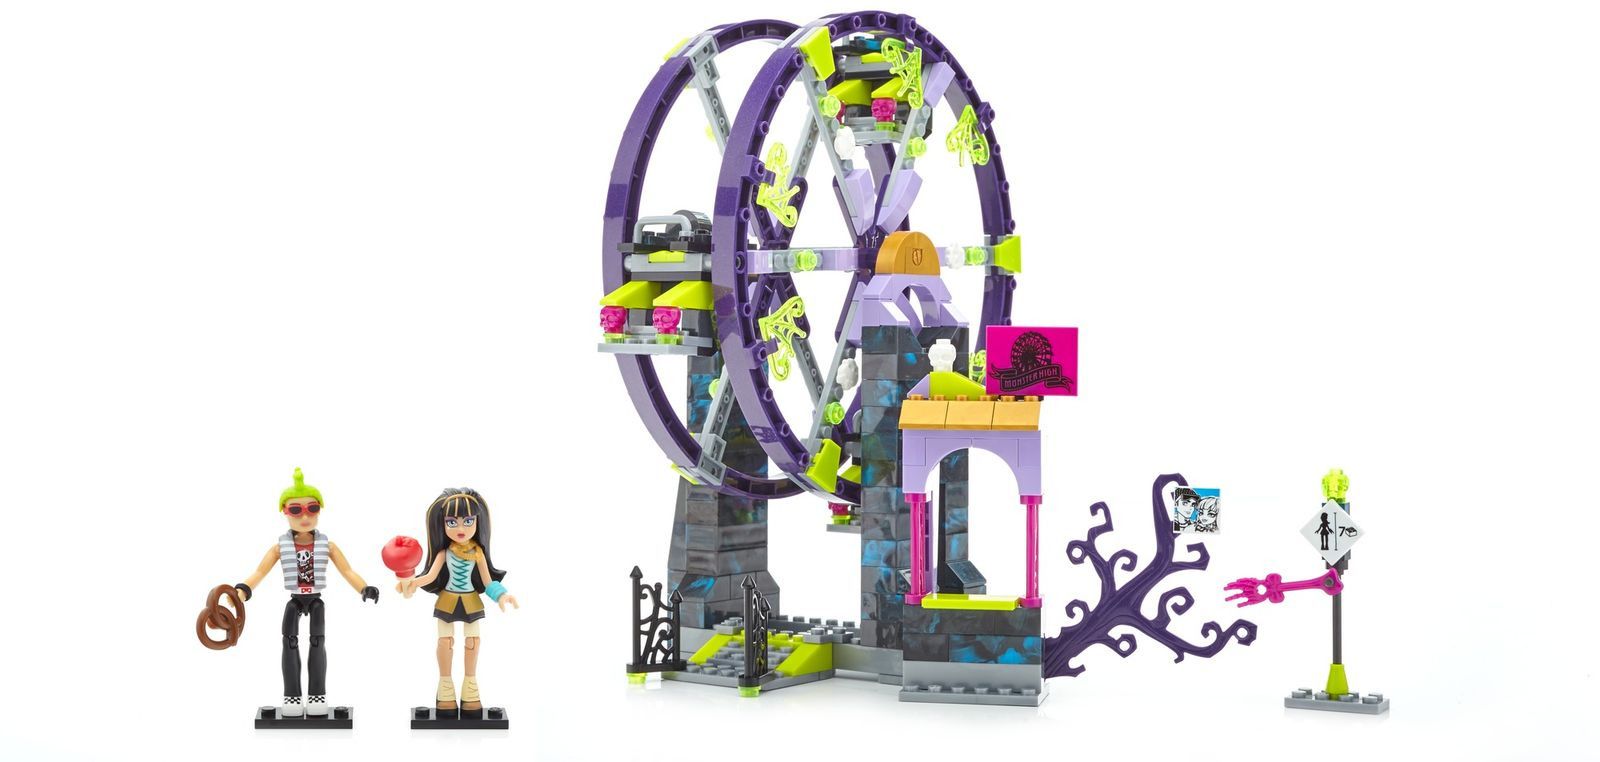 Mega Construx Monster High   